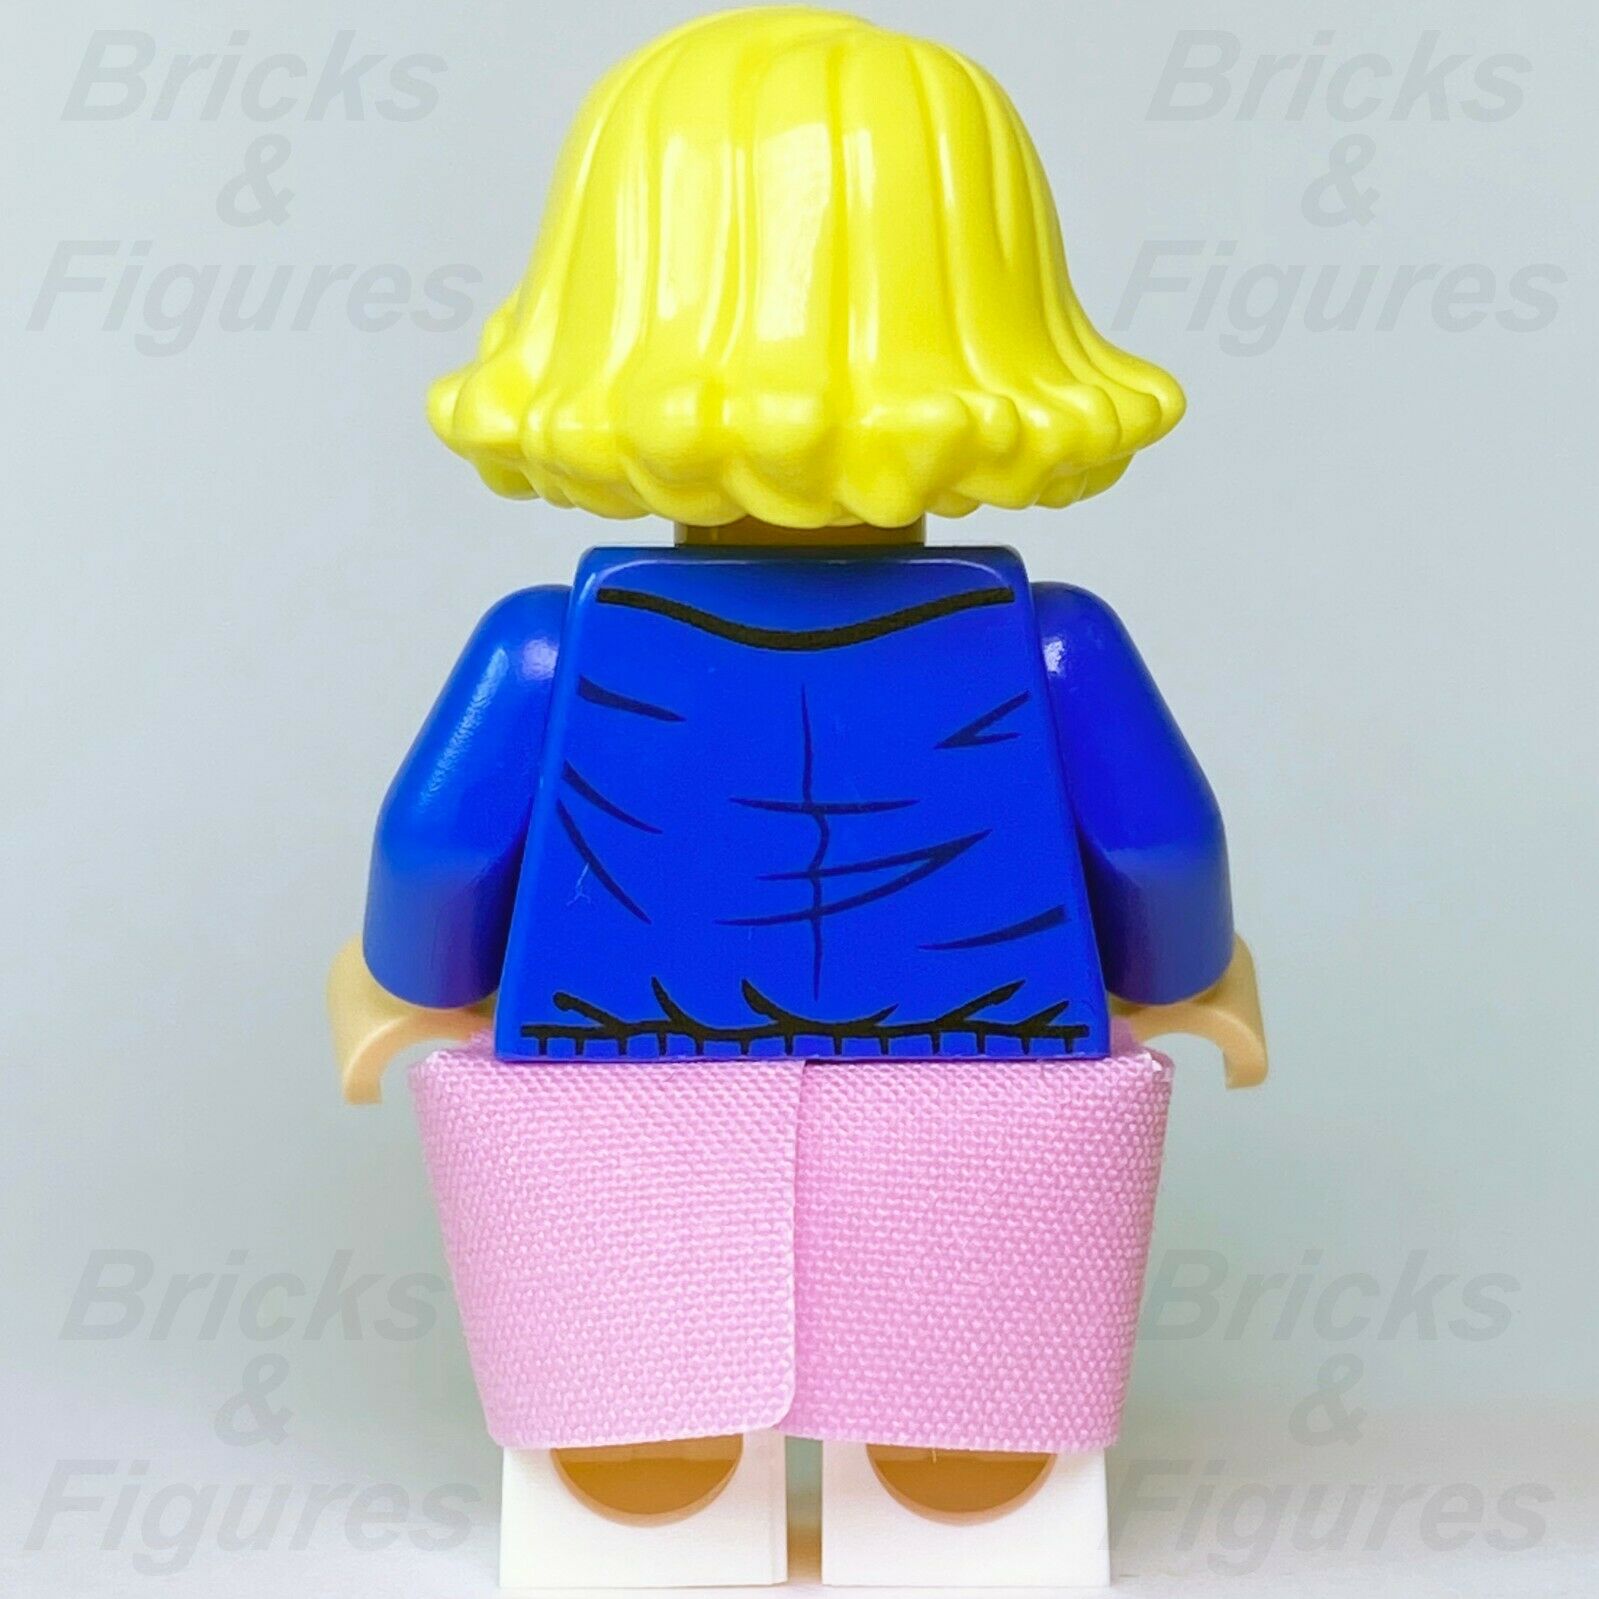 New Stranger Things LEGO Eleven Netflix TV Series Minifigure from set 75810 - Bricks & Figures